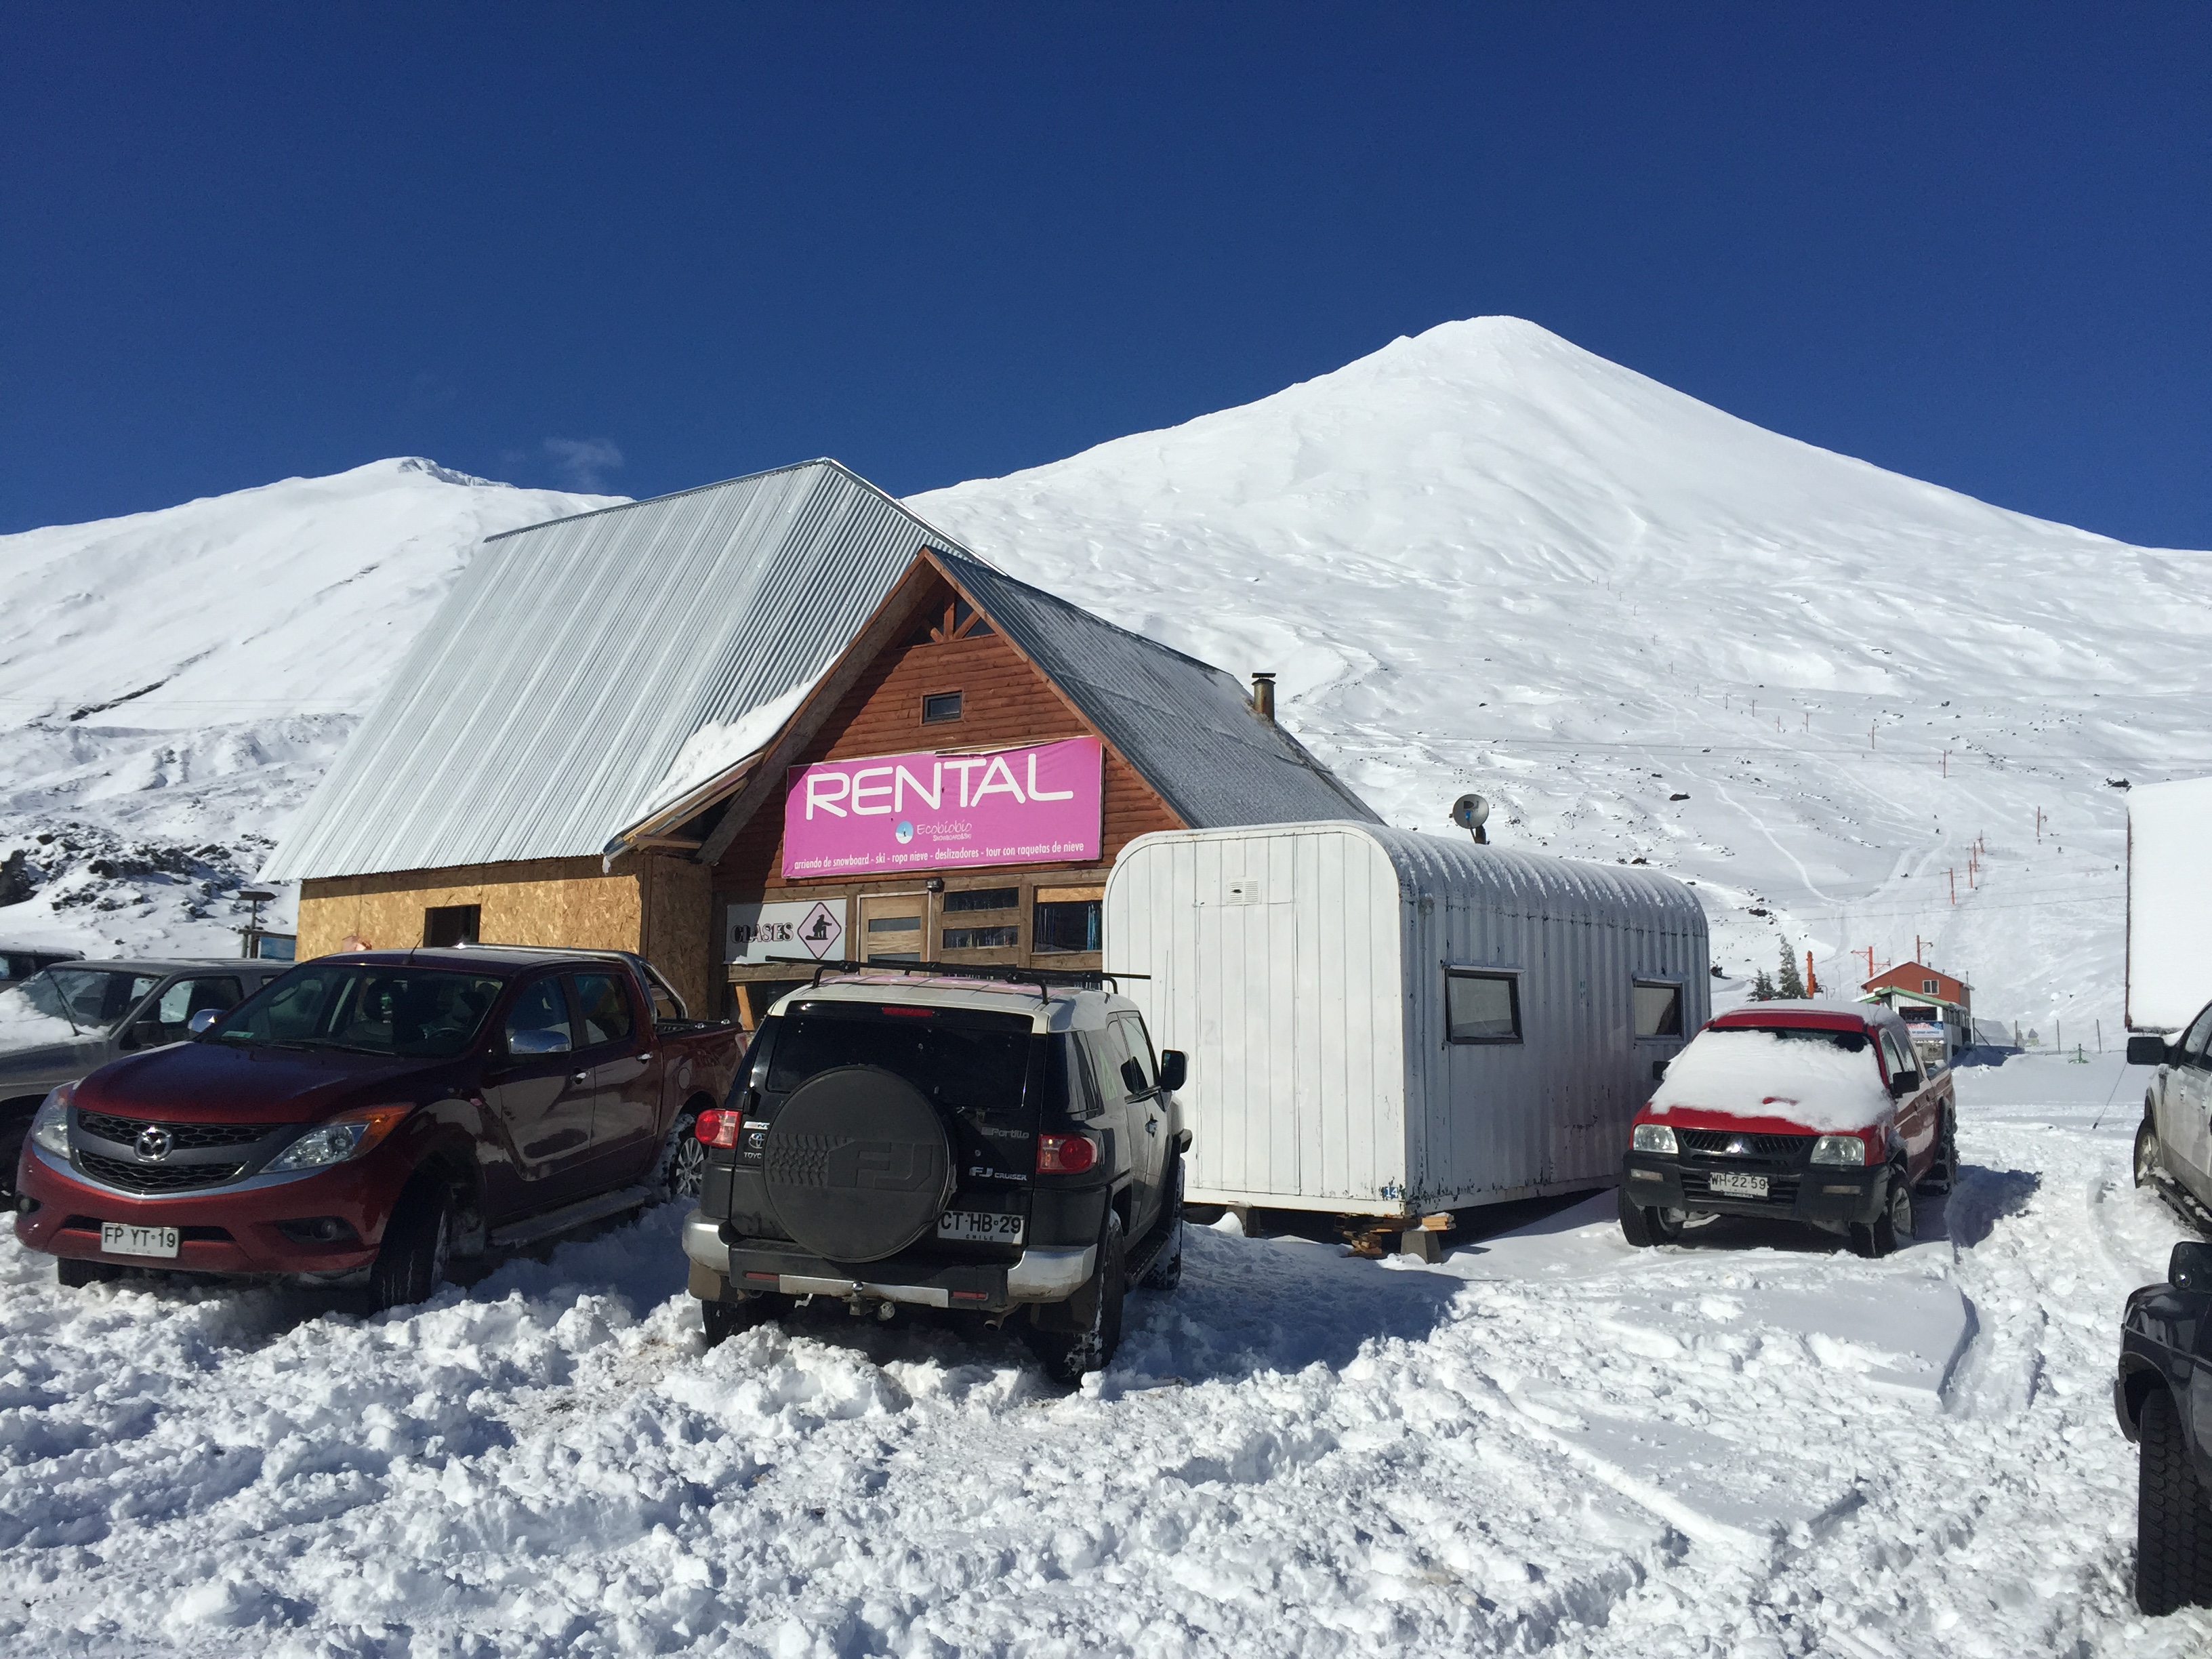 Rental ski Volcan Antuco